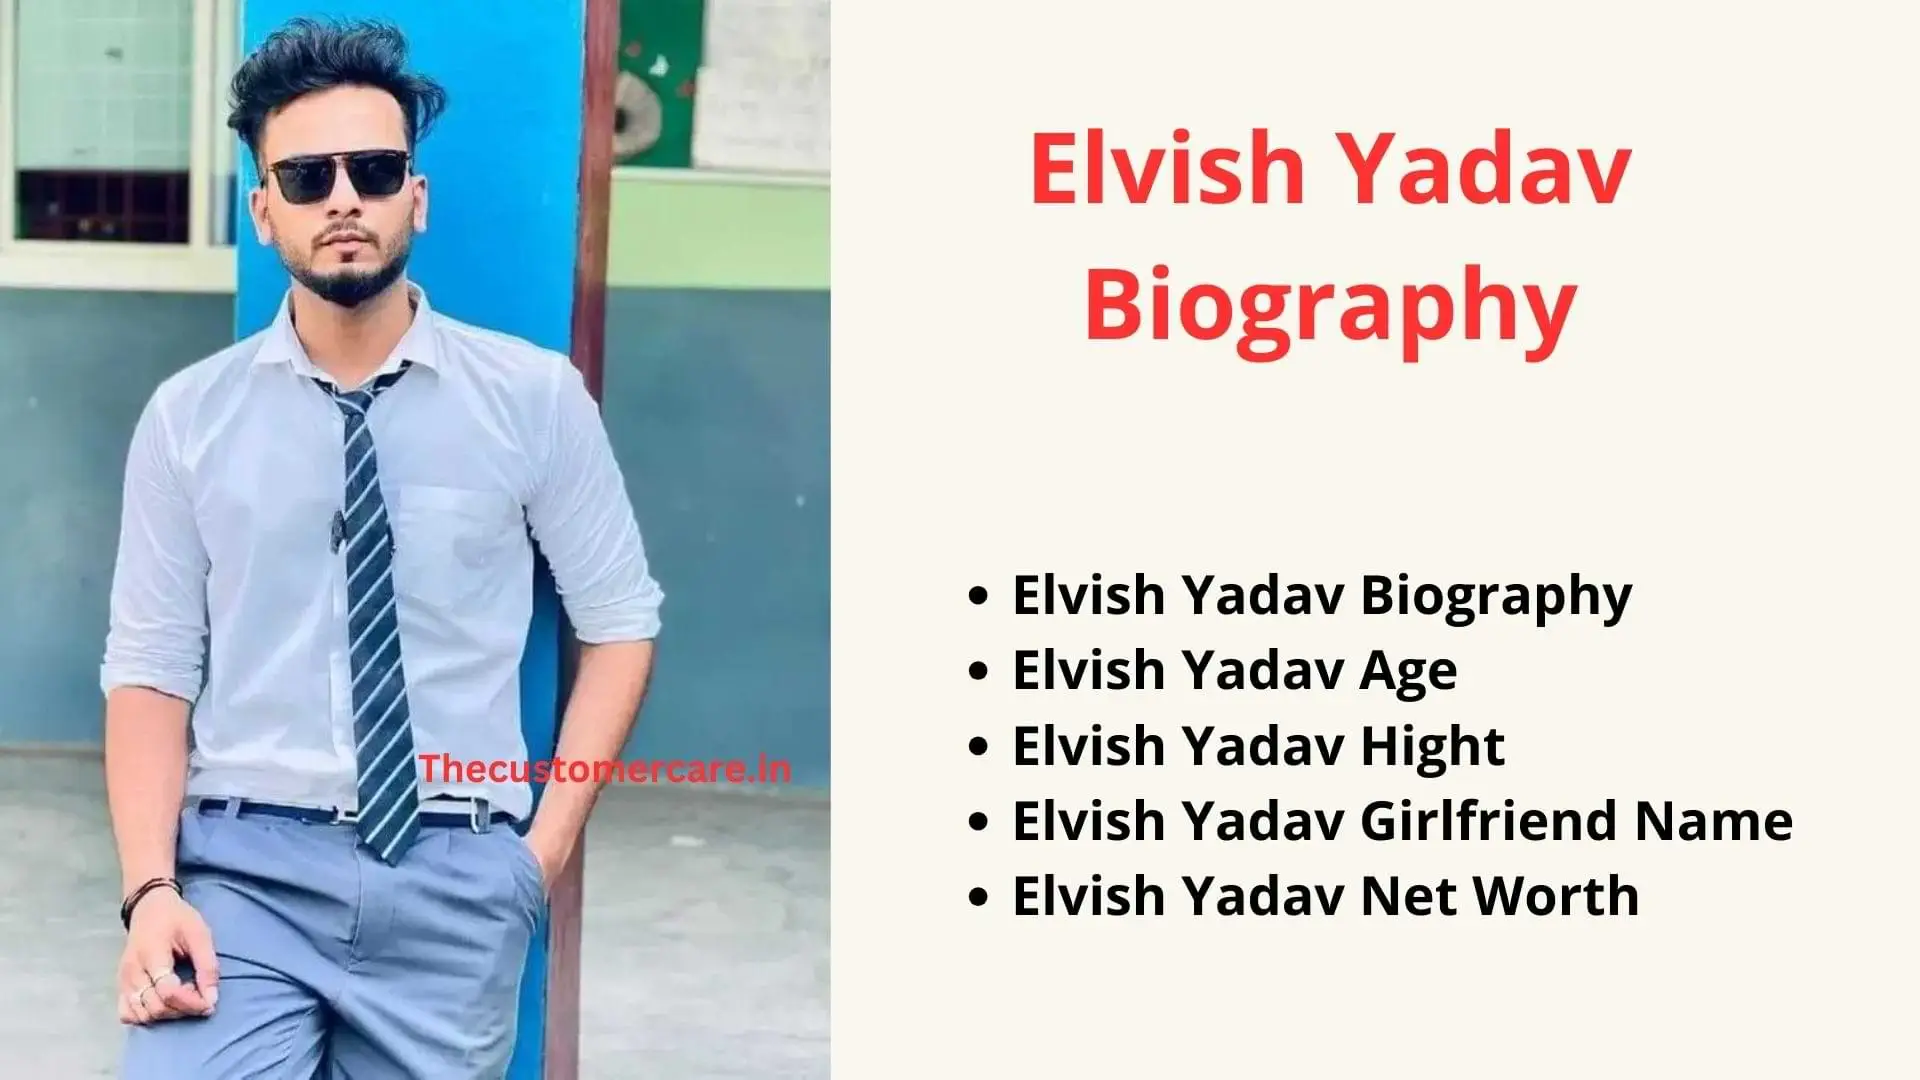 Elvish Yadav Biography